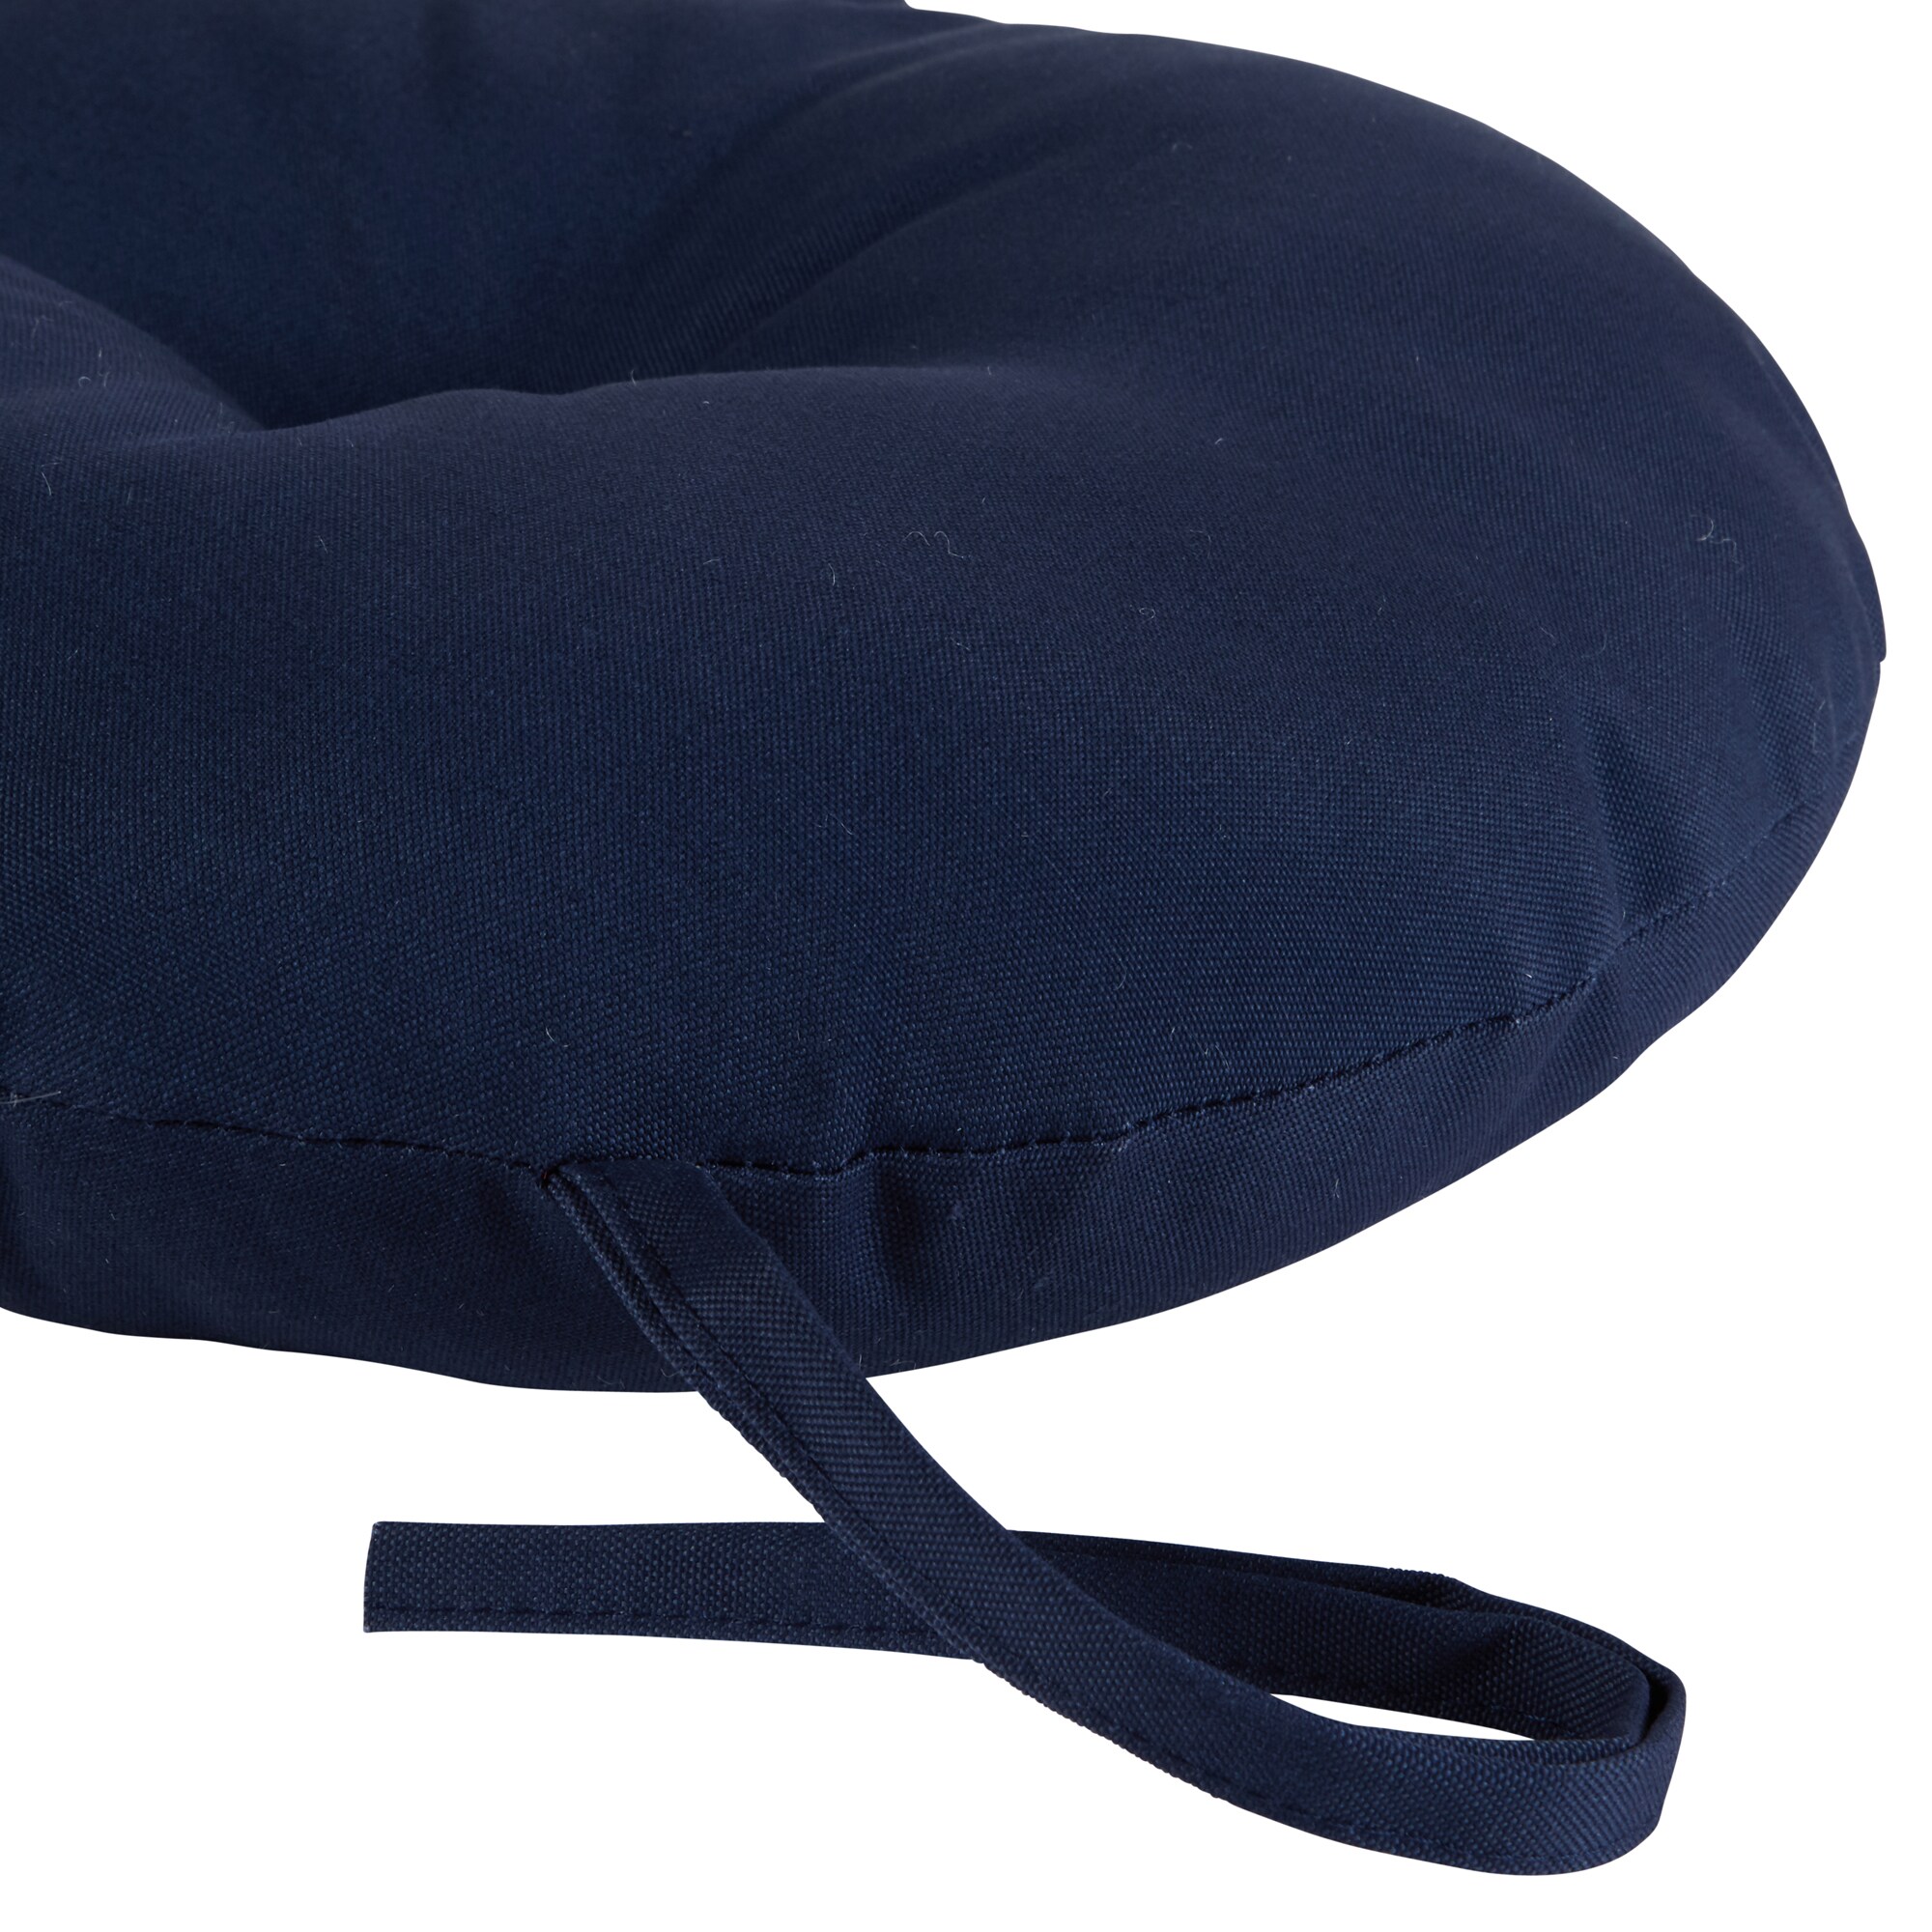 DMI 18-inch Molded Foam Ring Donut Seat Cushion Pillow, Navy